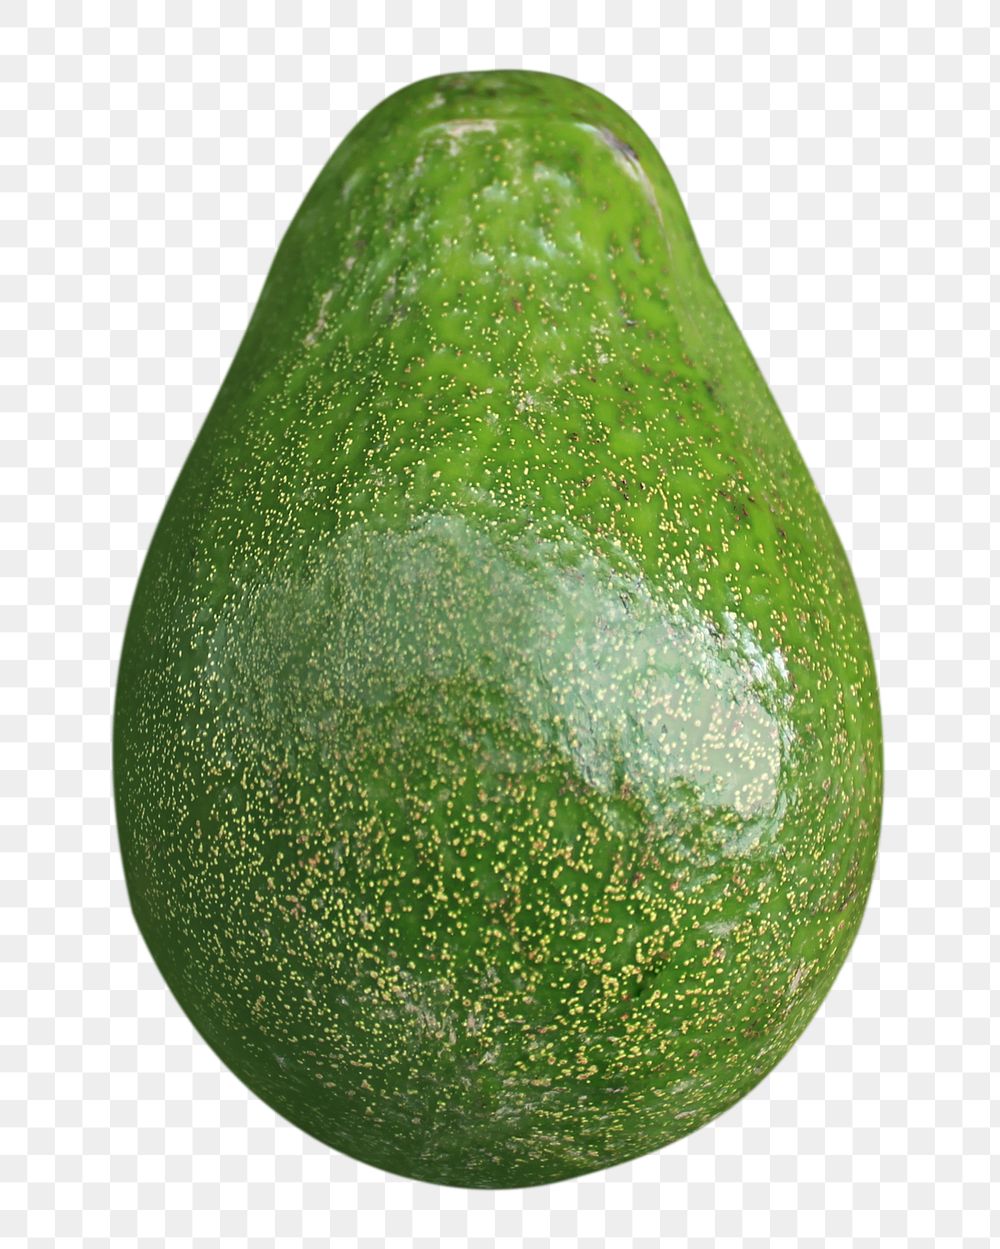 Green avocado png, transparent background